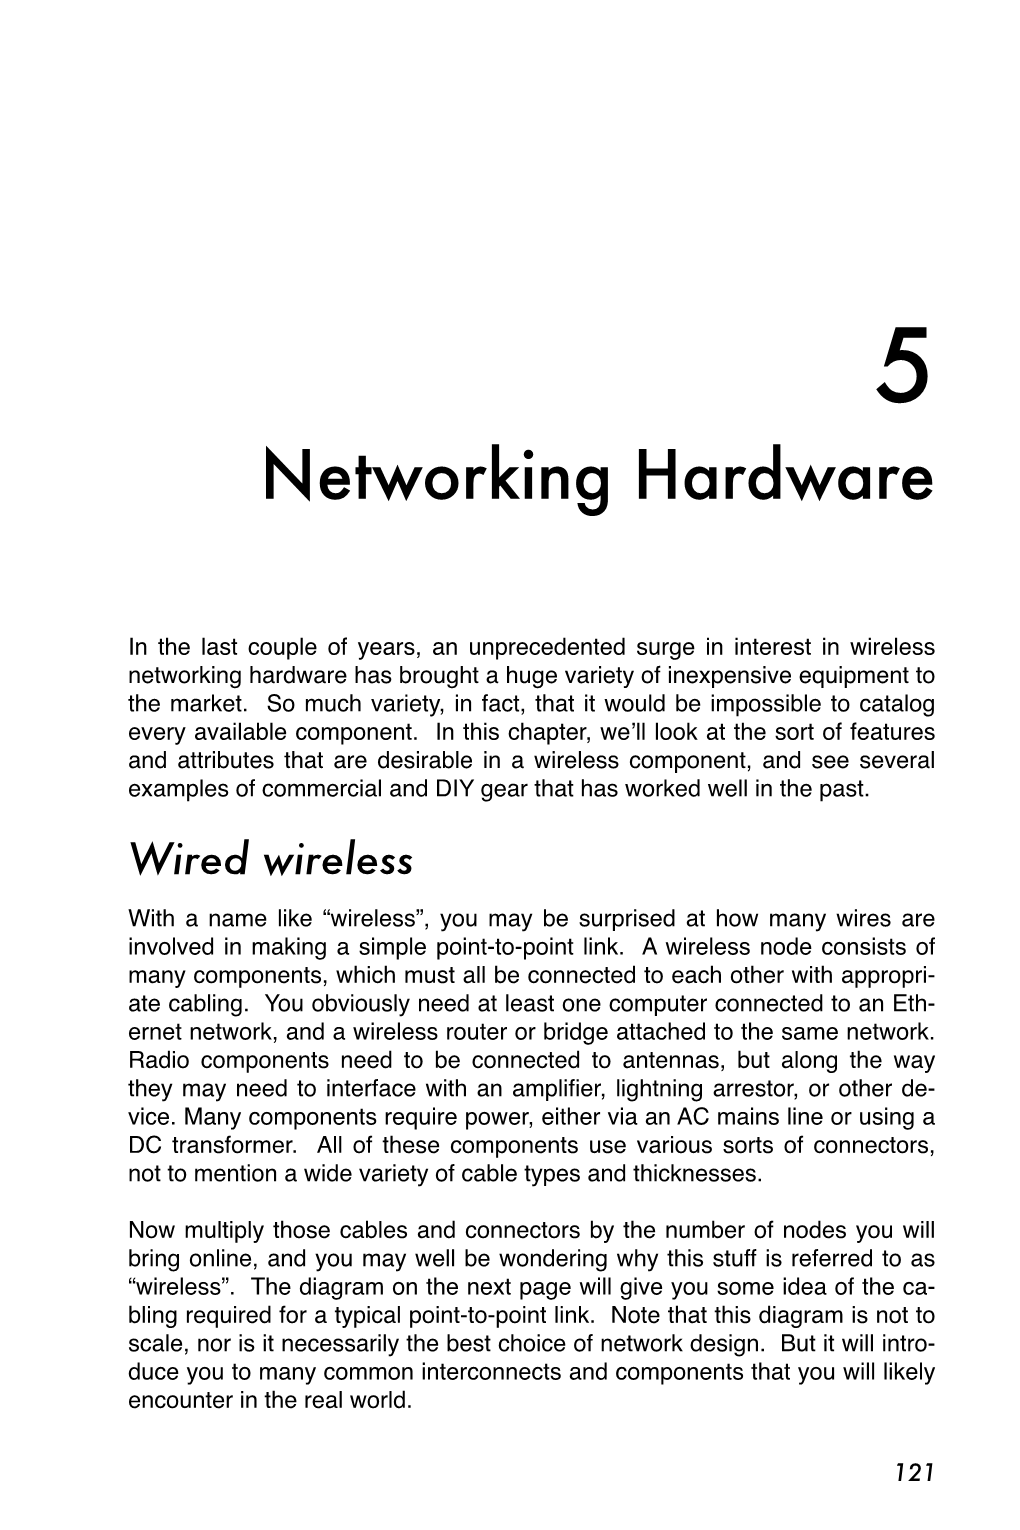 Networking Hardware